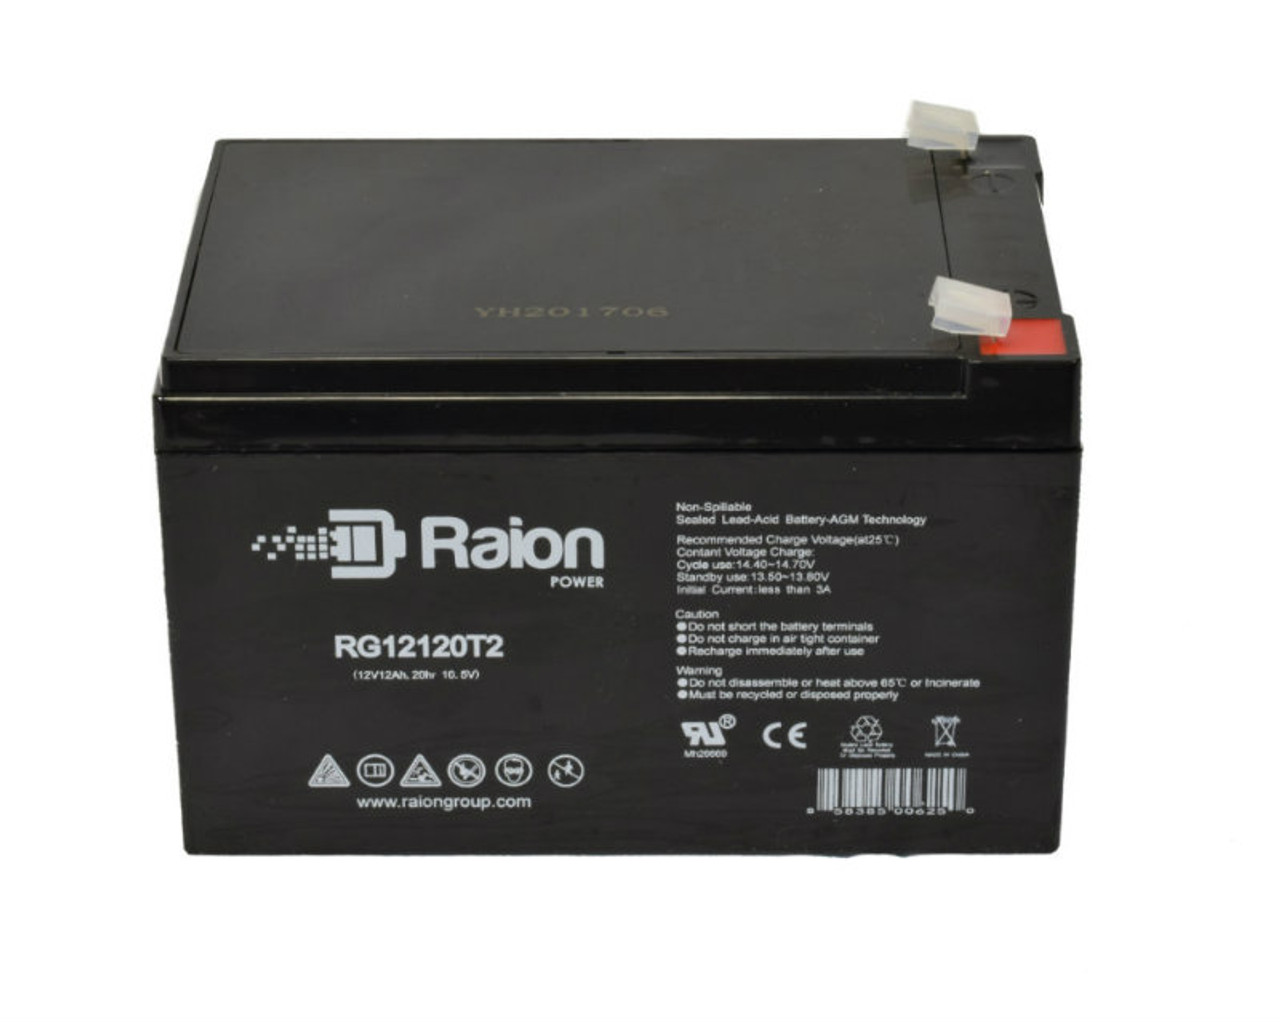 Raion Power RG12120T2 SLA Battery for Palma PM10A-12